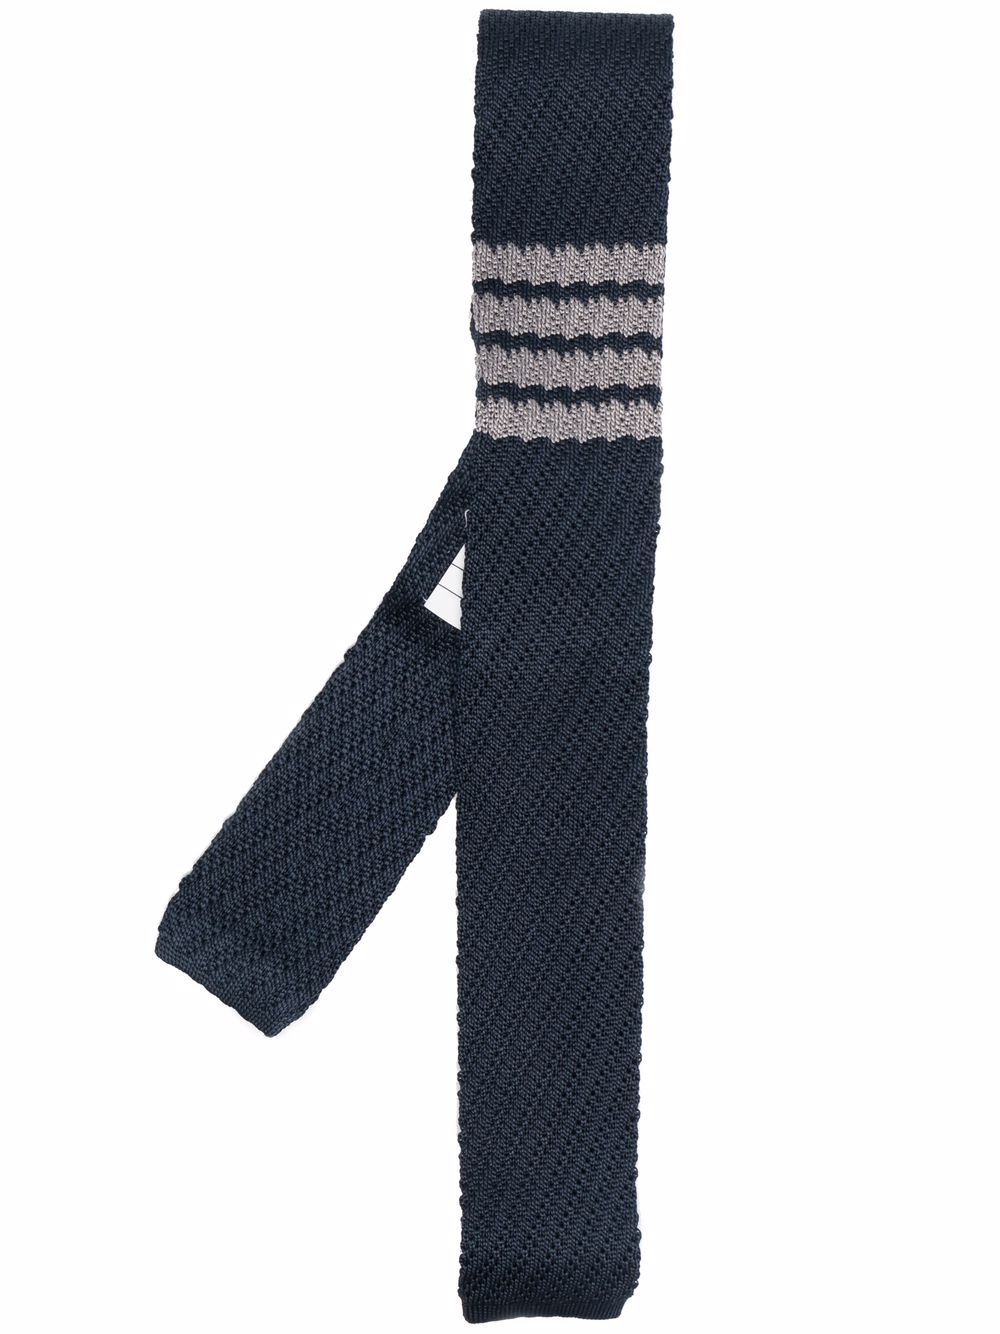 Thom Browne 4-Bar striped tie